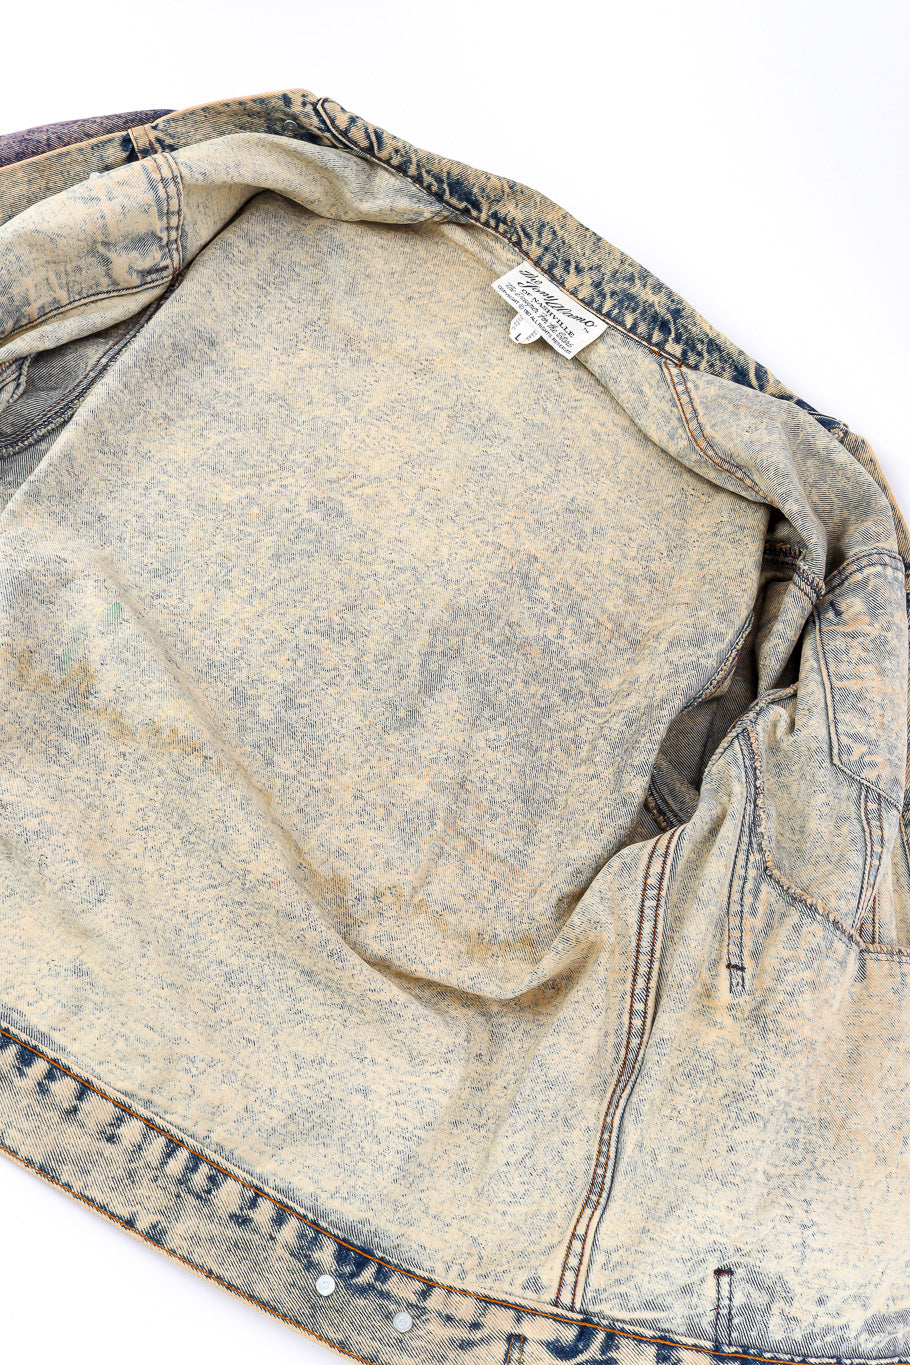 Vintage Tony Alamo The Big Apple Denim Jacket view of jacket inside with staining @Recessla